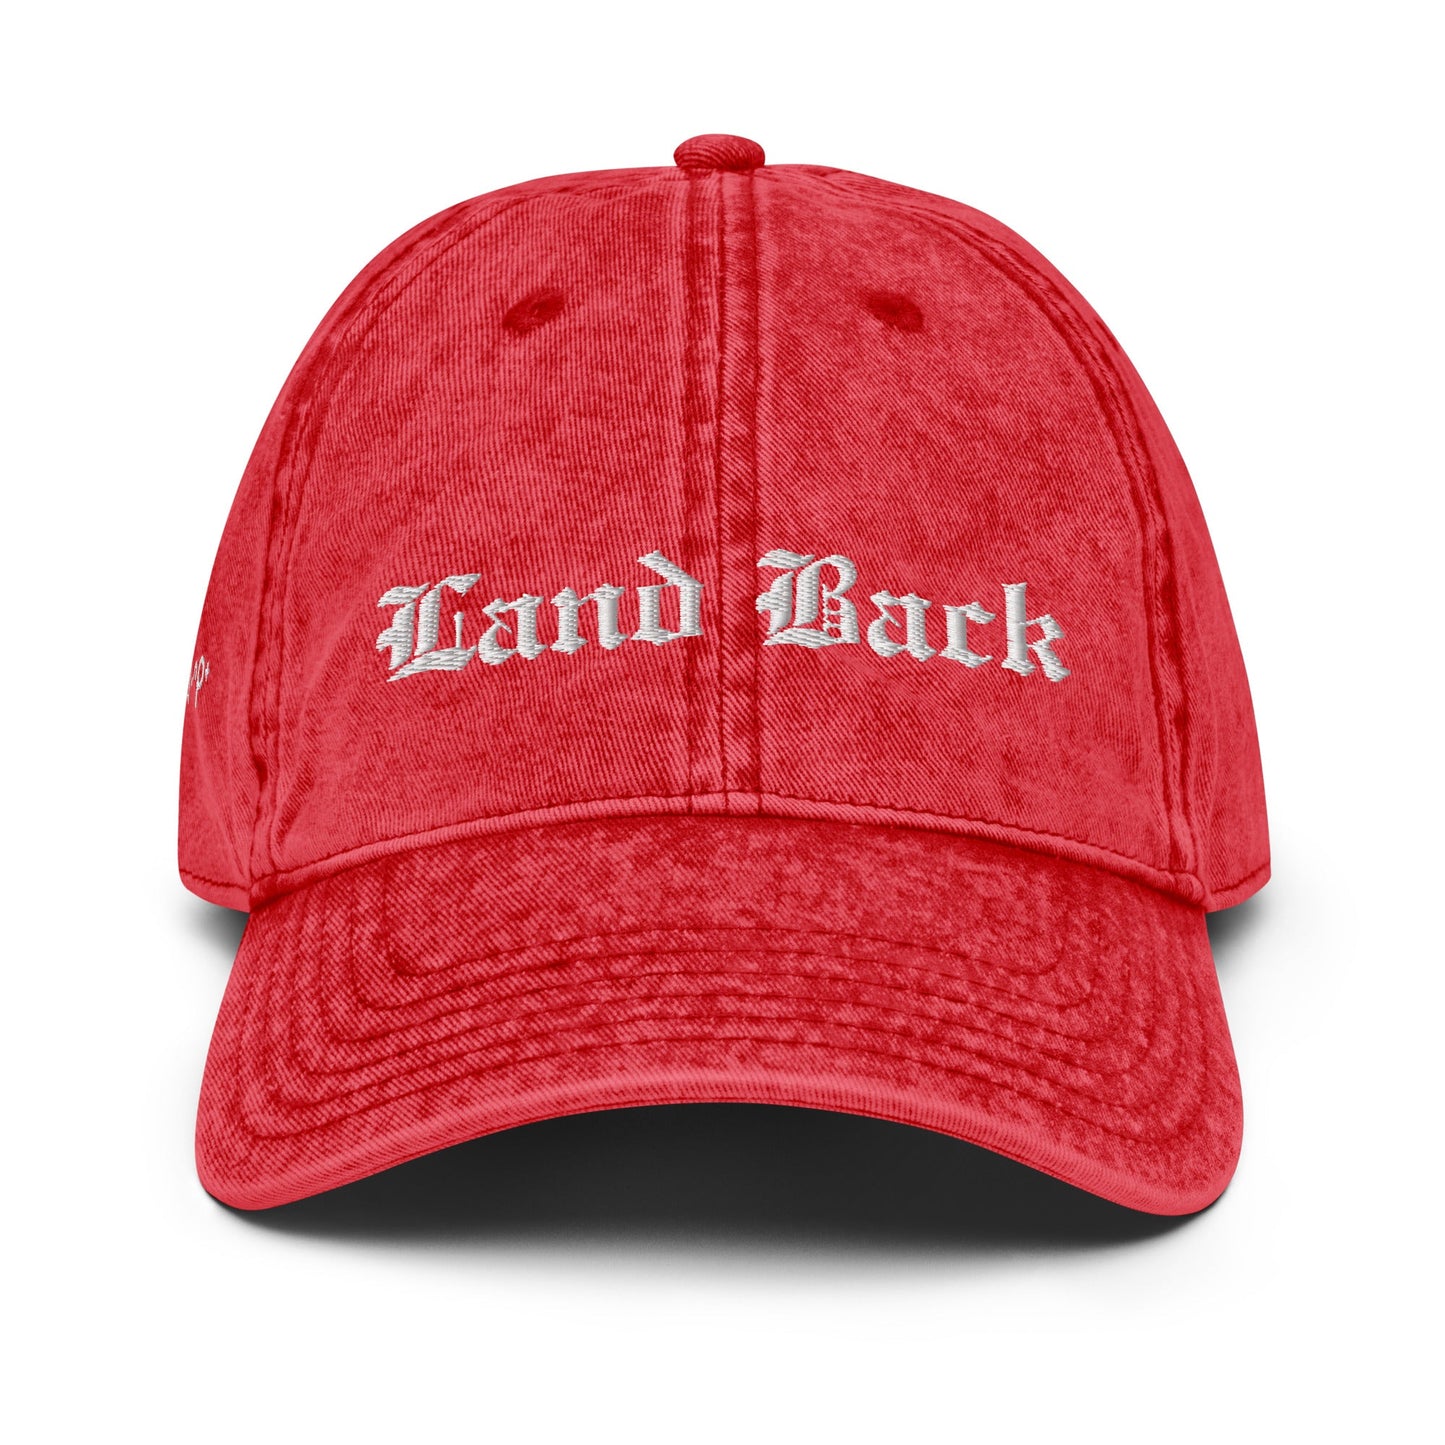 Land Back Vintage Cotton Twill Cap - Nikikw Designs